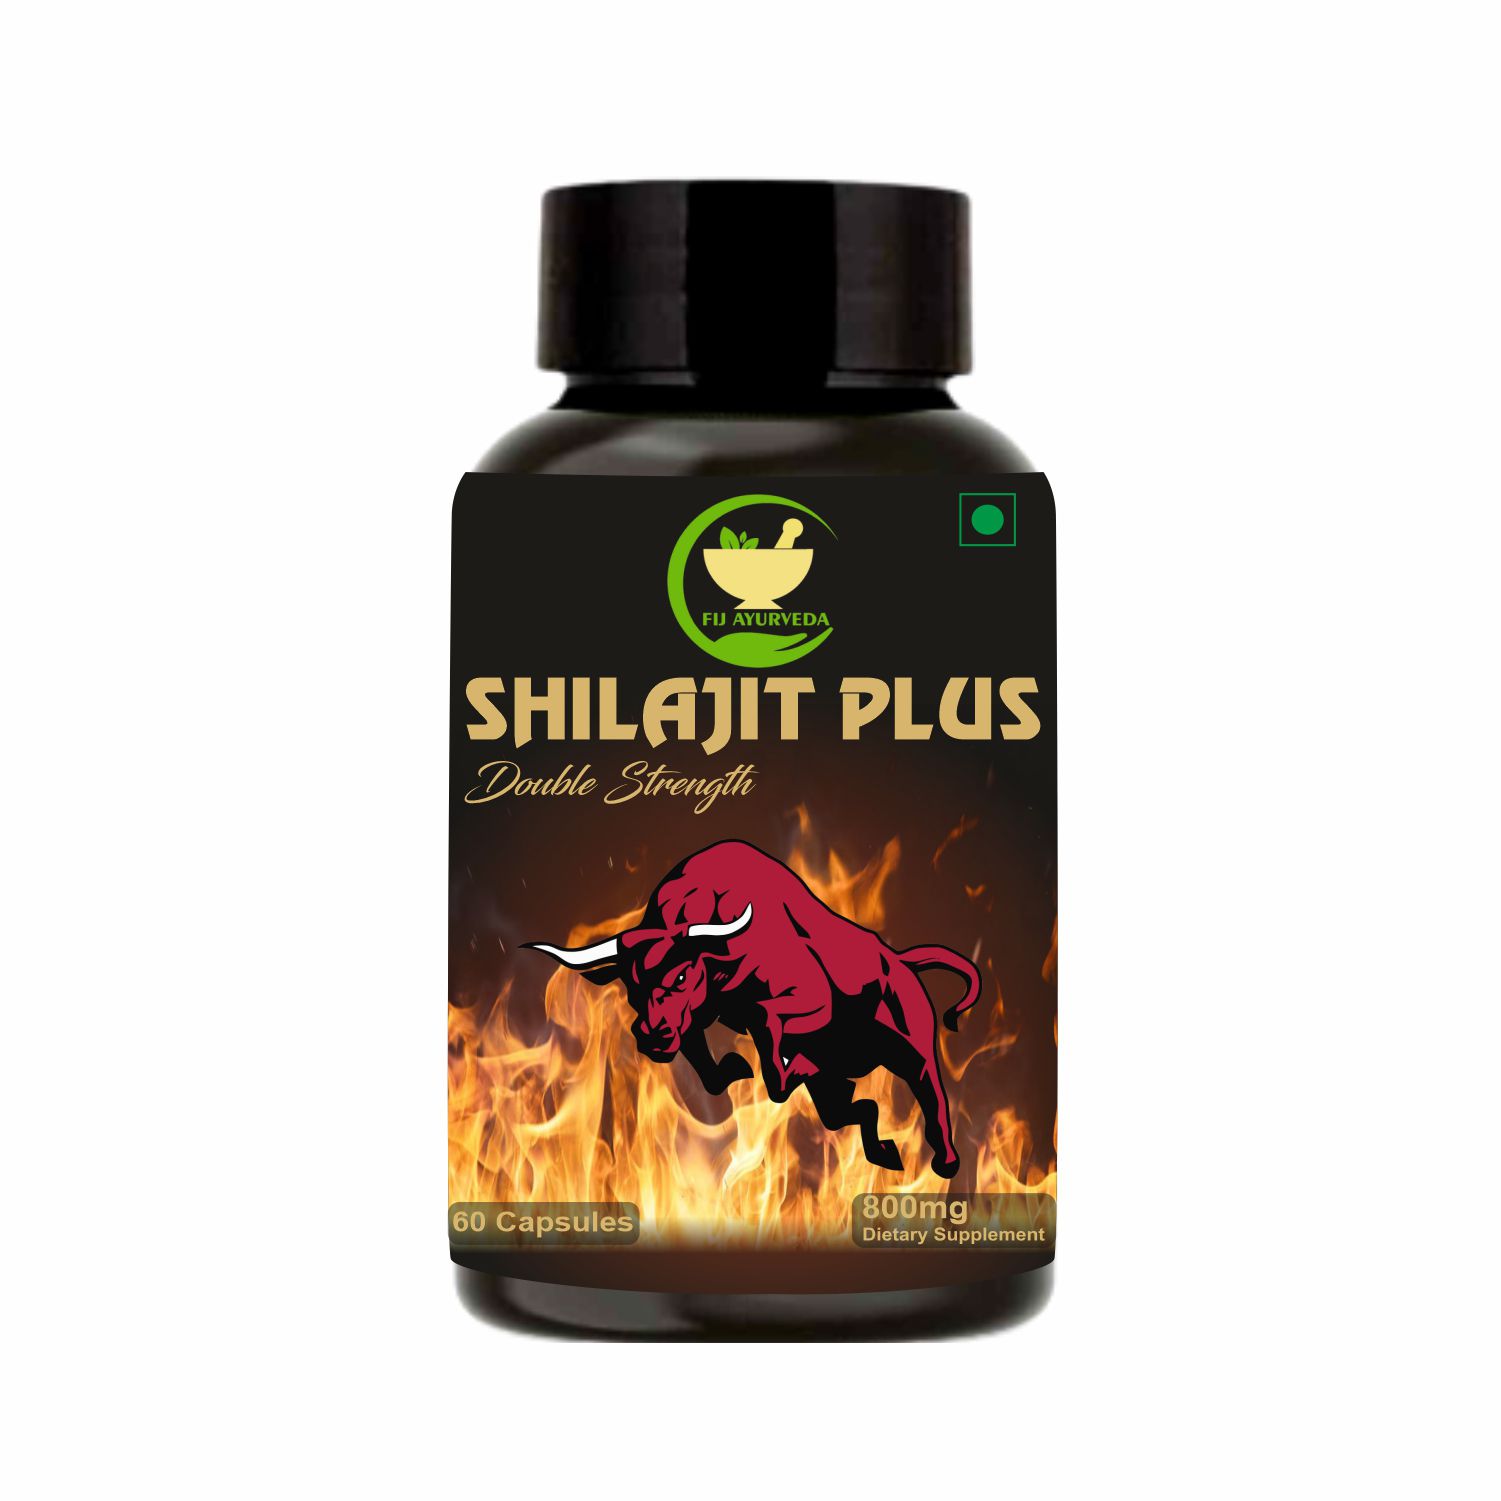     			FIJ AYURVEDA Shilajit Plus Extract Capsule | Premium Shilajit | for Men & Women – 800mg 60 Capsules